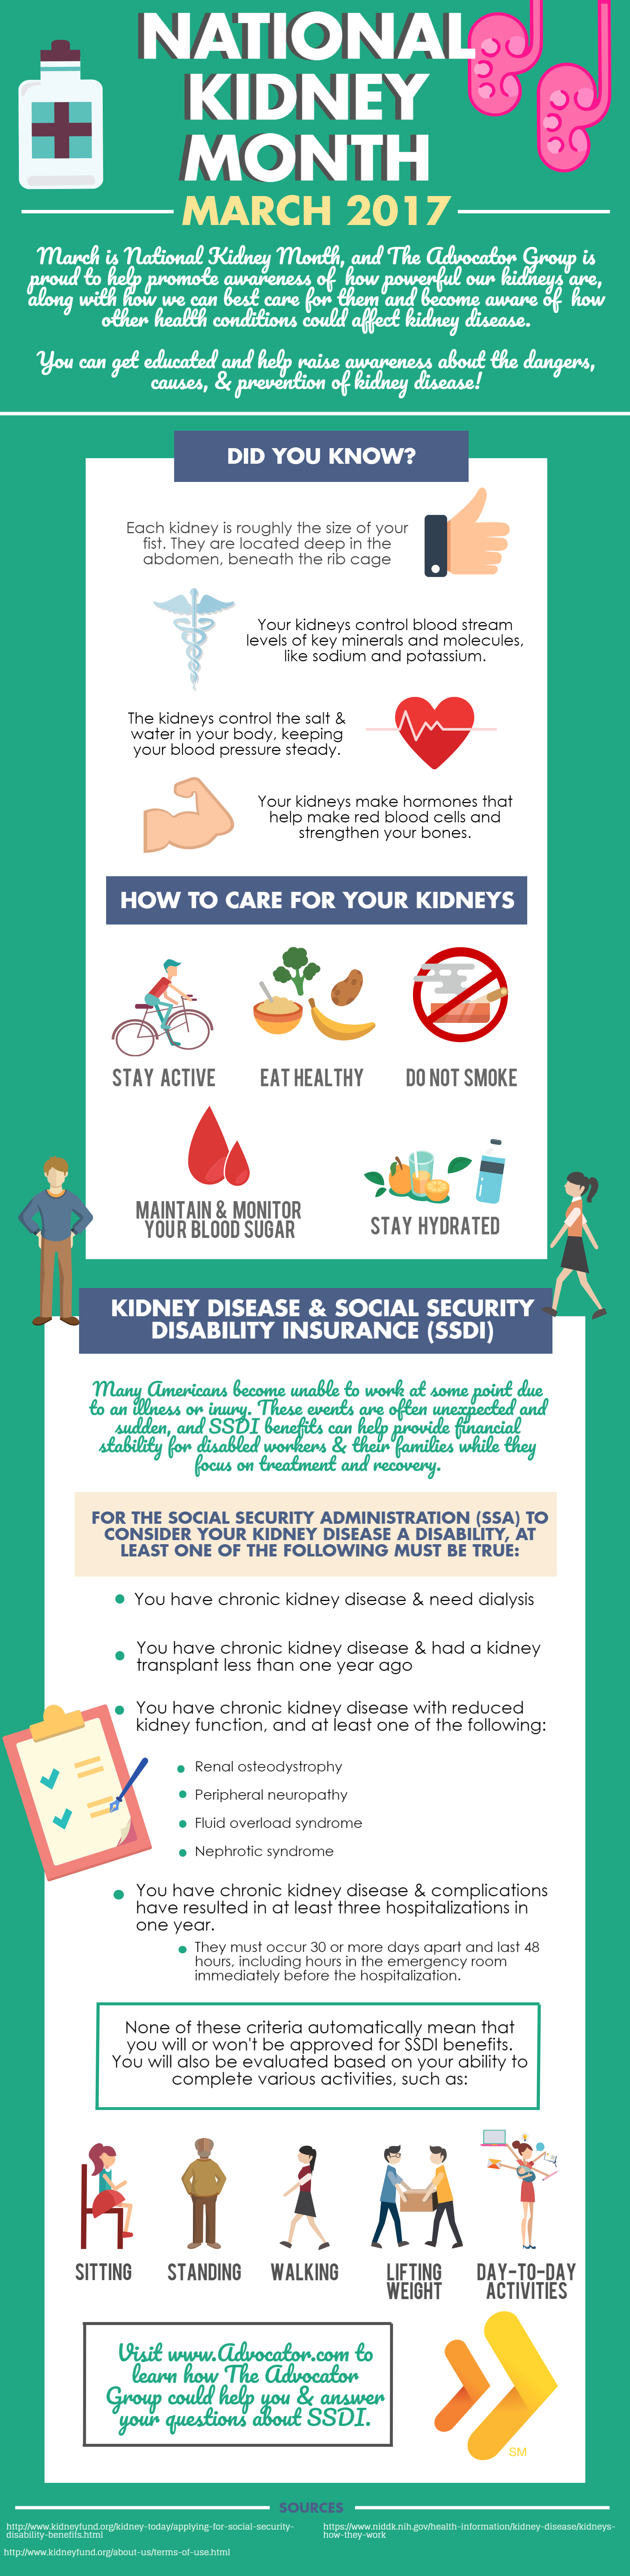 Natl kidney month infographic